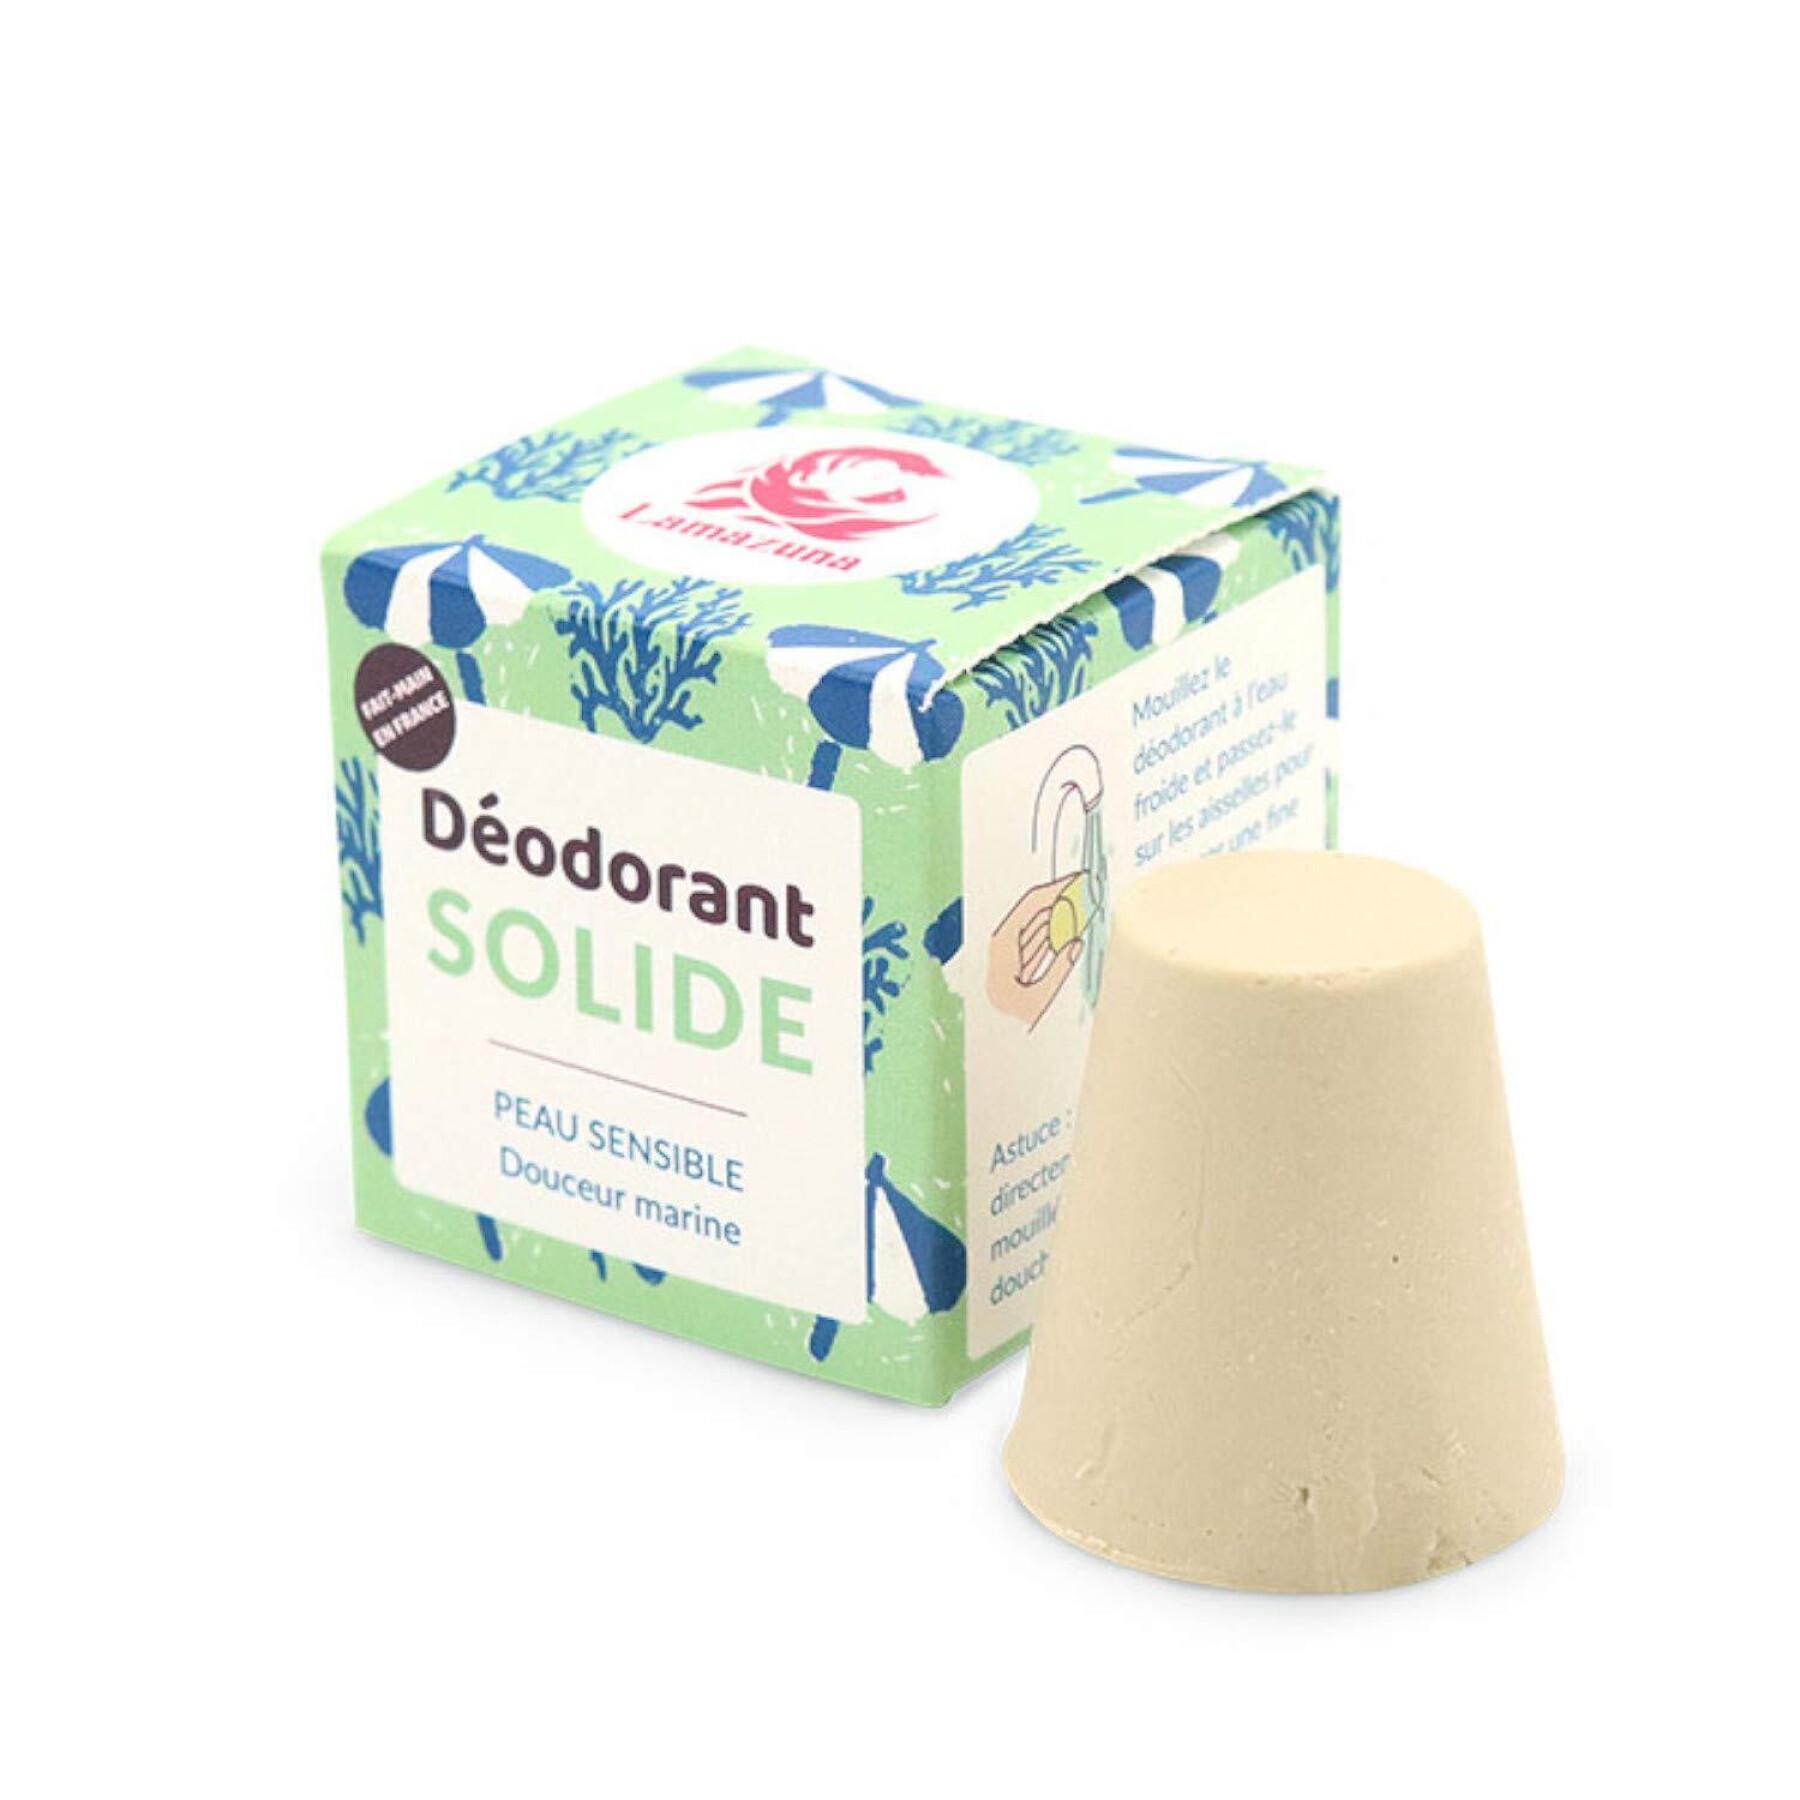 Déodorant solide - douceur marine - peau sensible Lamazuna (30 ml)